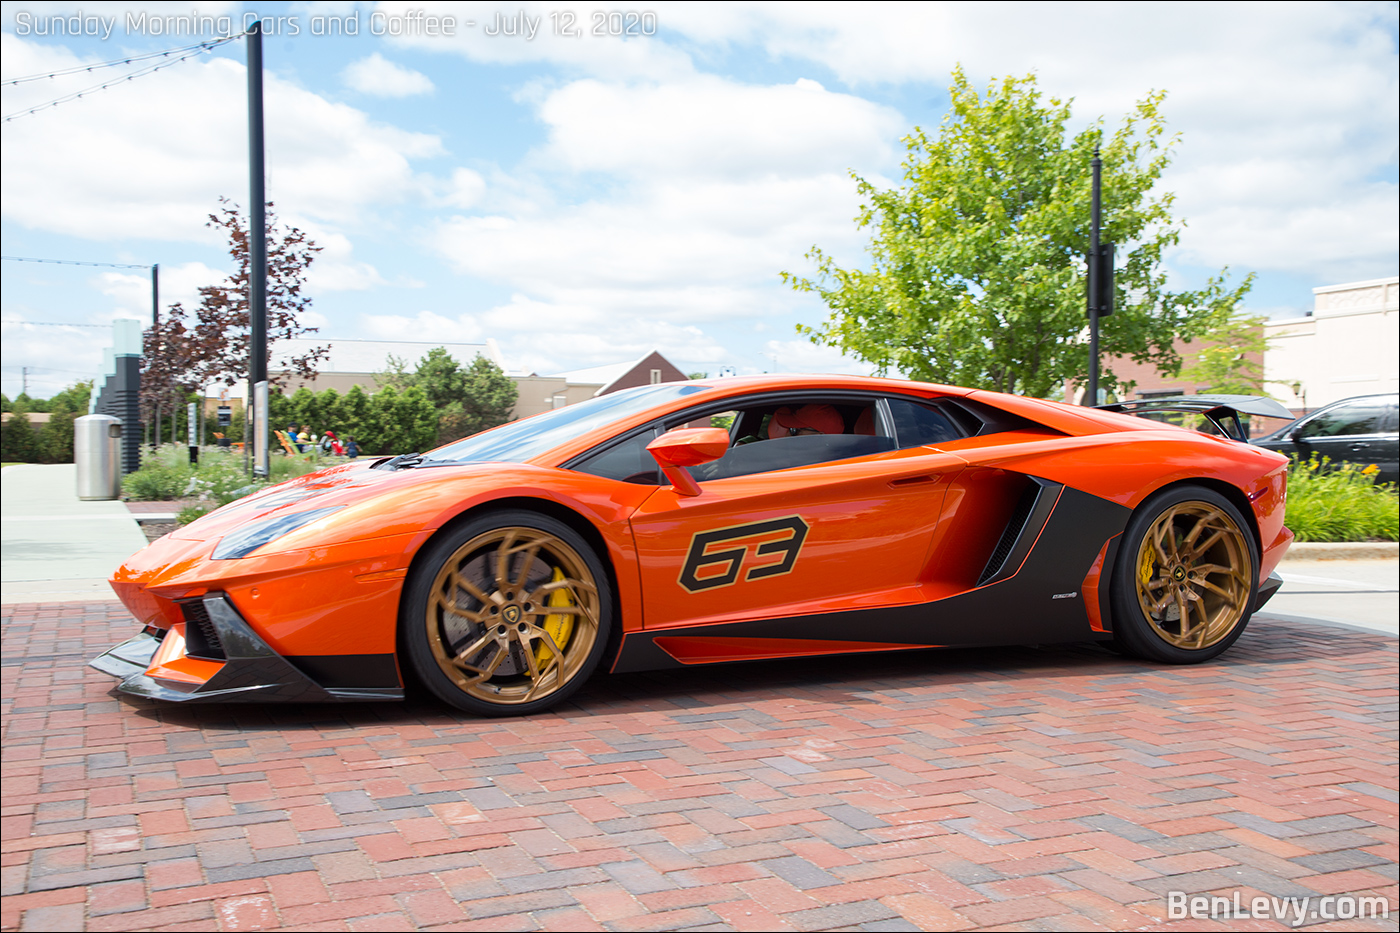 Orange Lamborghini Aventador at Sunday Morning Cars and Coffee